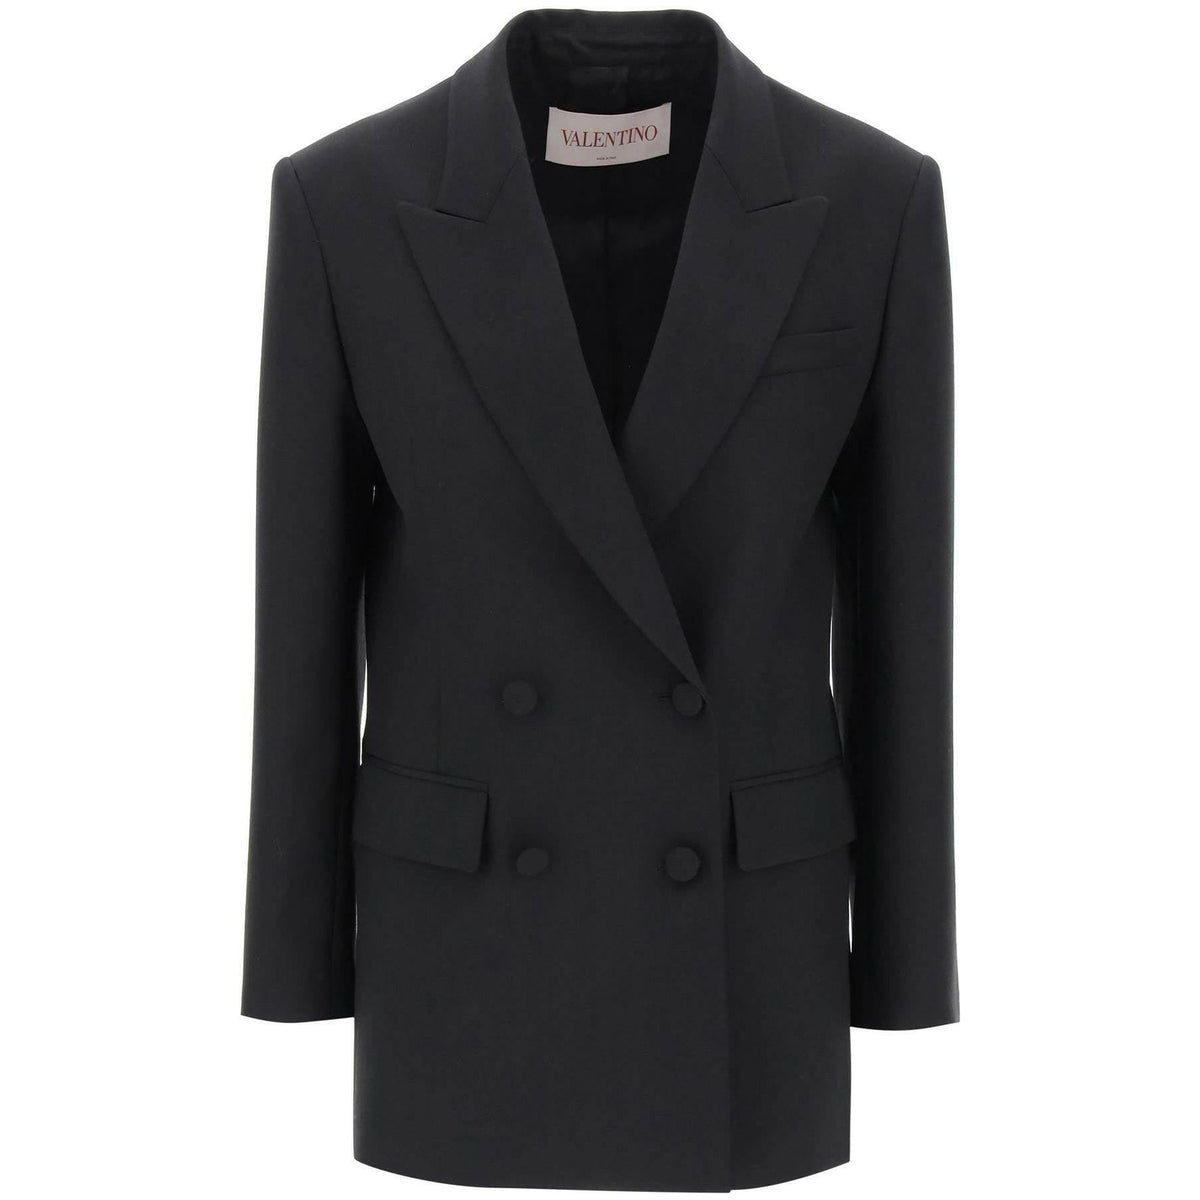 Black Tailored Double-Breasted Wool Jacket VALENTINO GARAVANI JOHN JULIA.